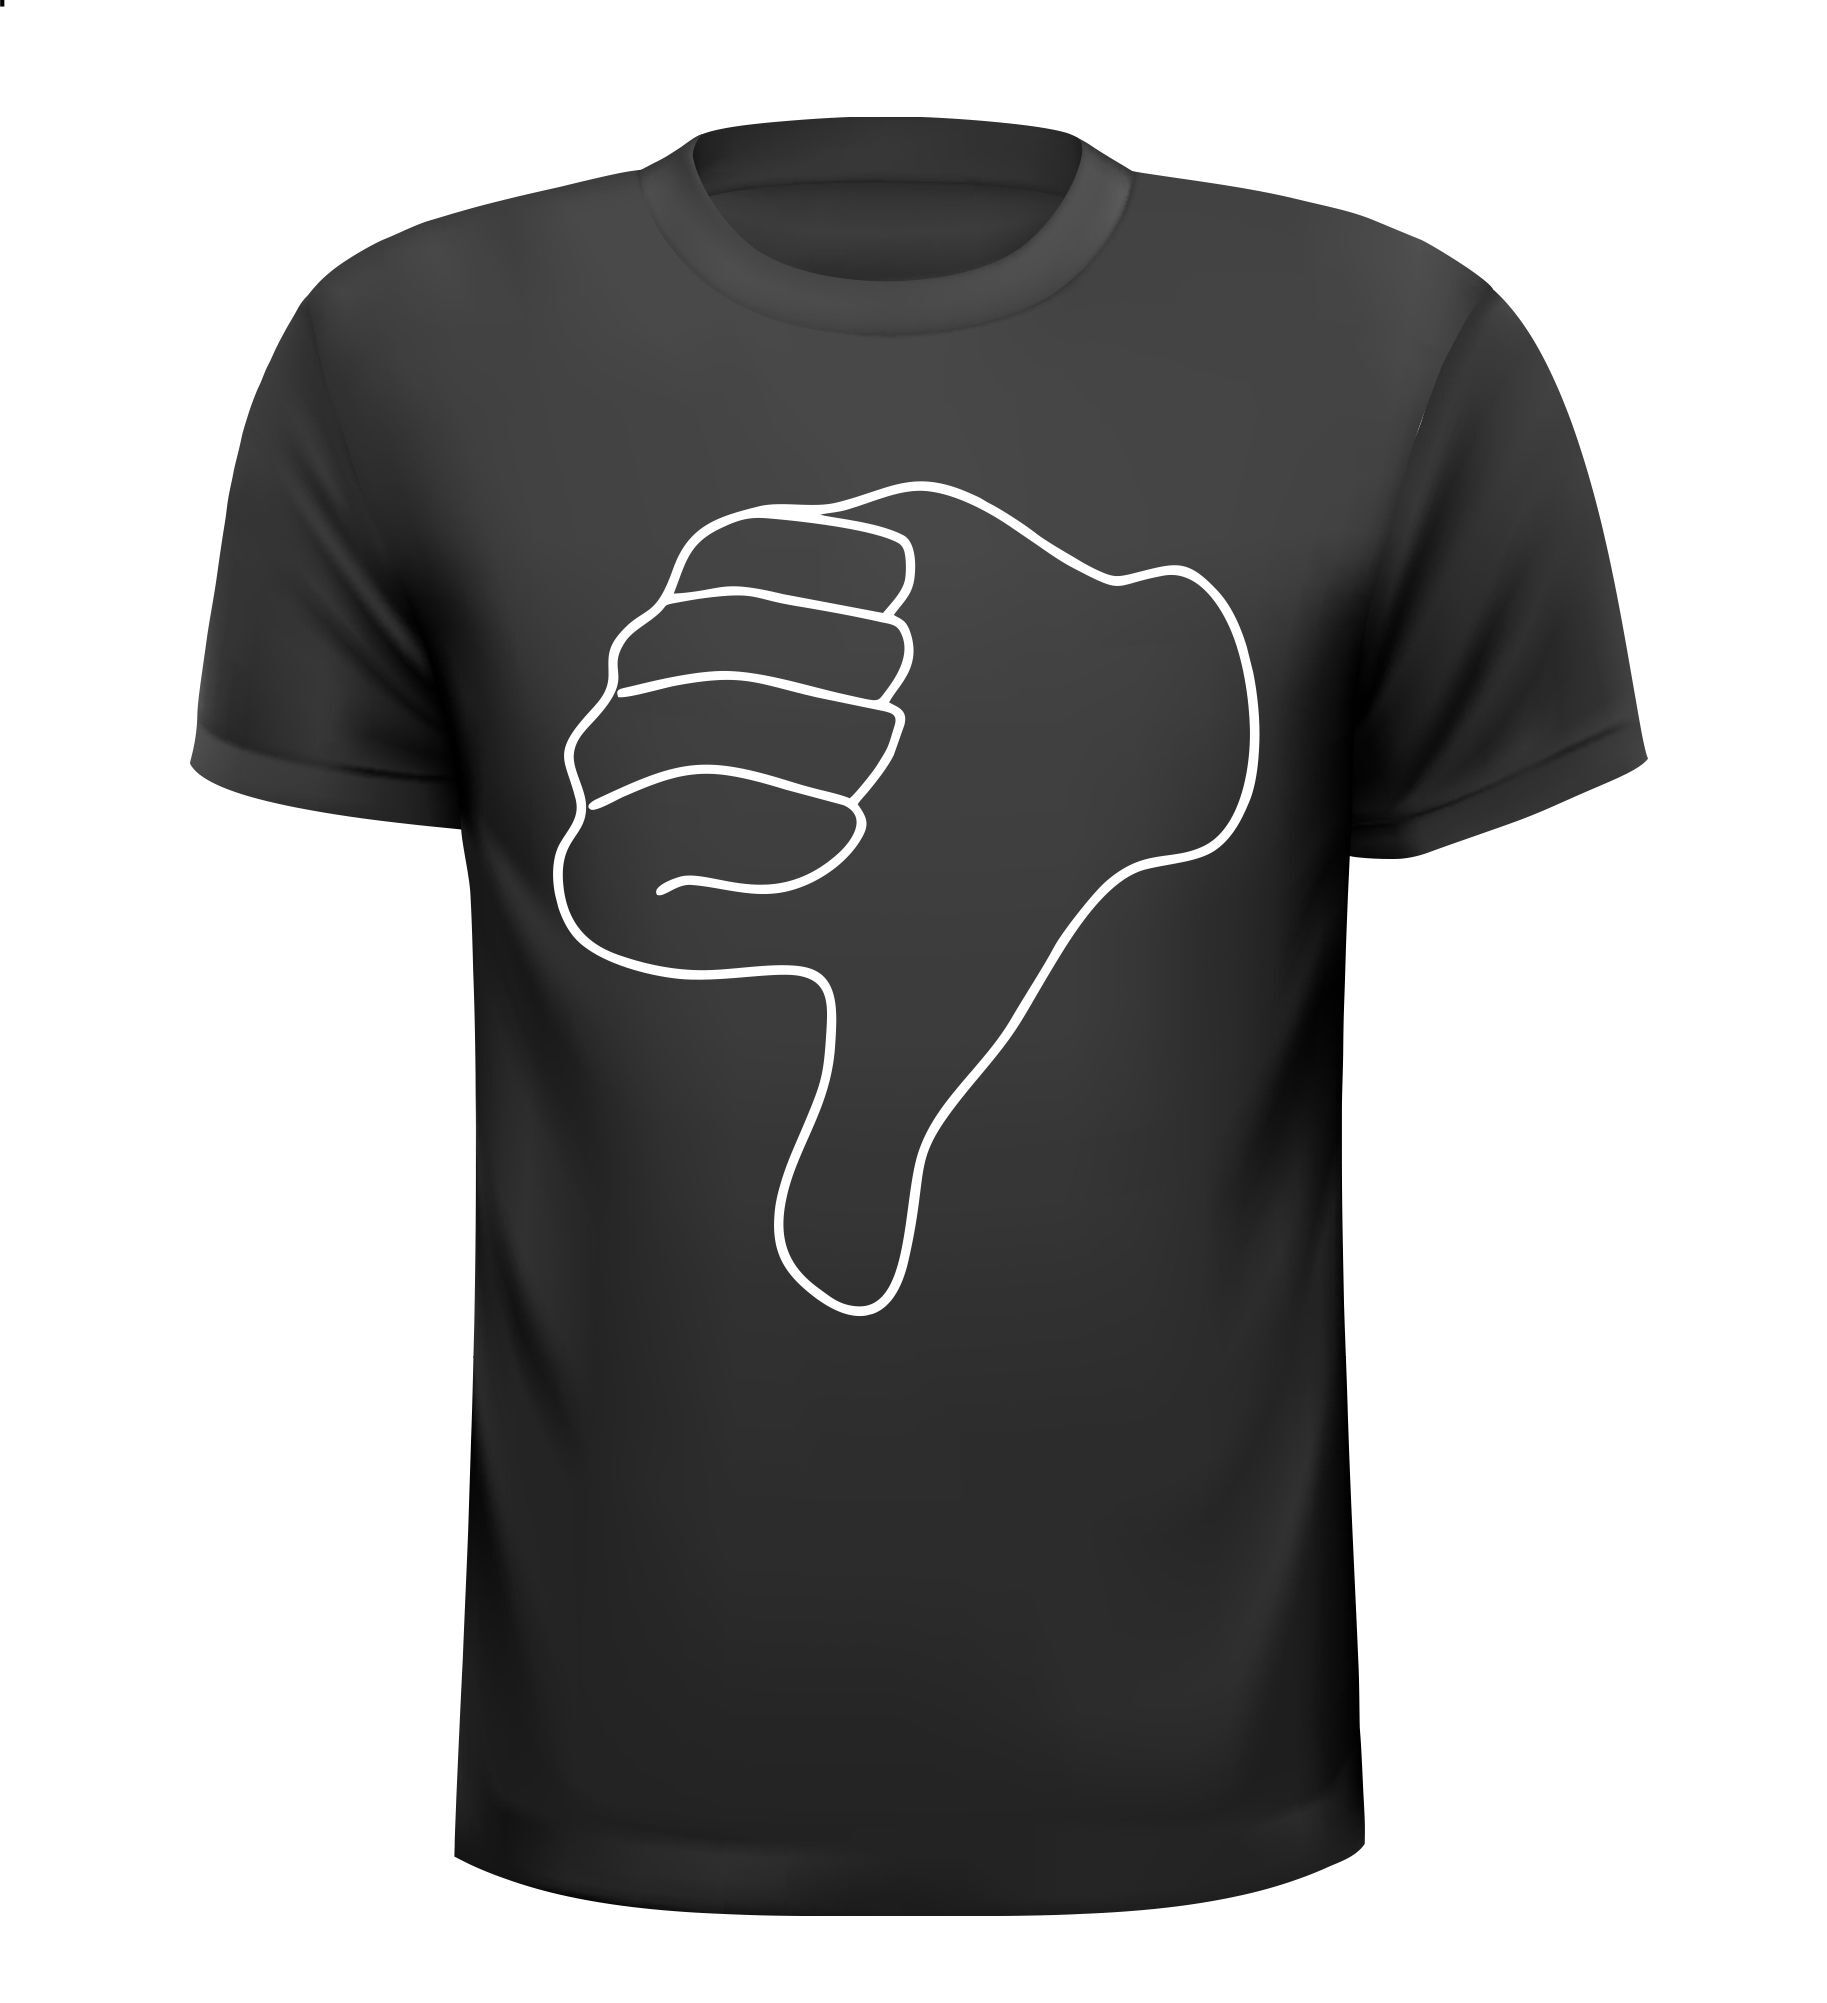 Shirt duim omlaag protest shirtje demonstratie shirtje